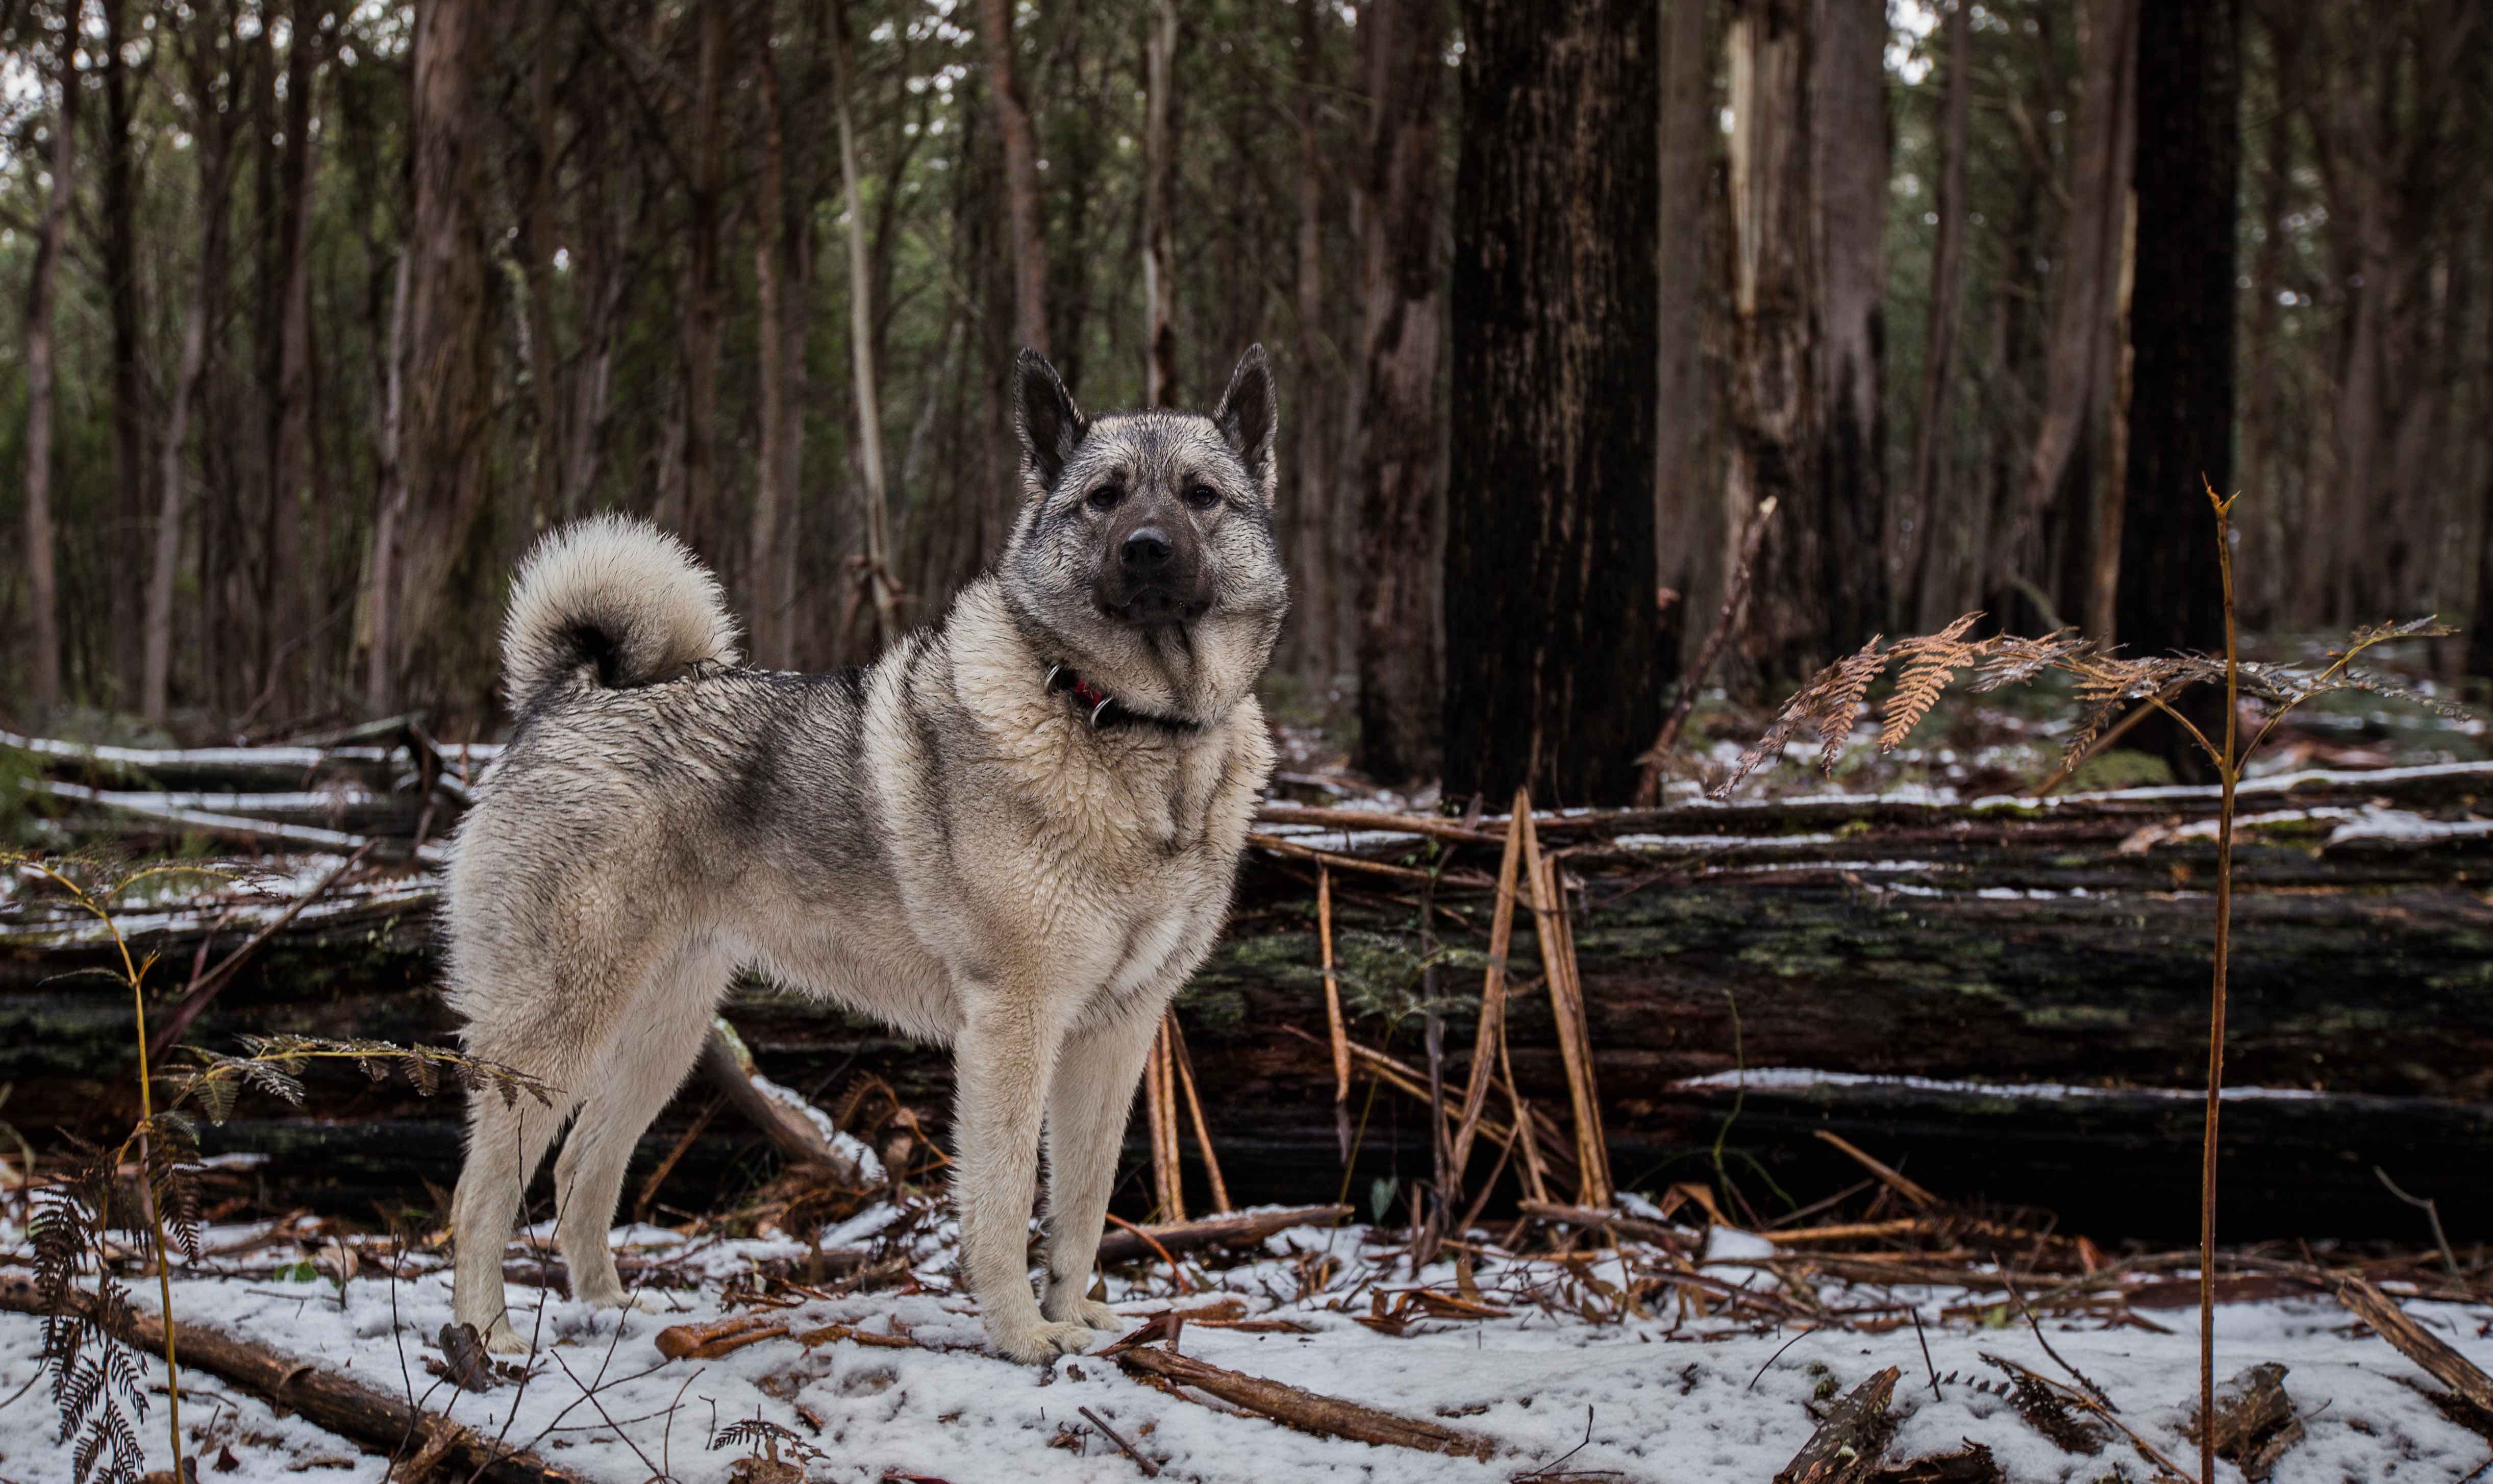 Norwegian Elkhound standing in snowy forest